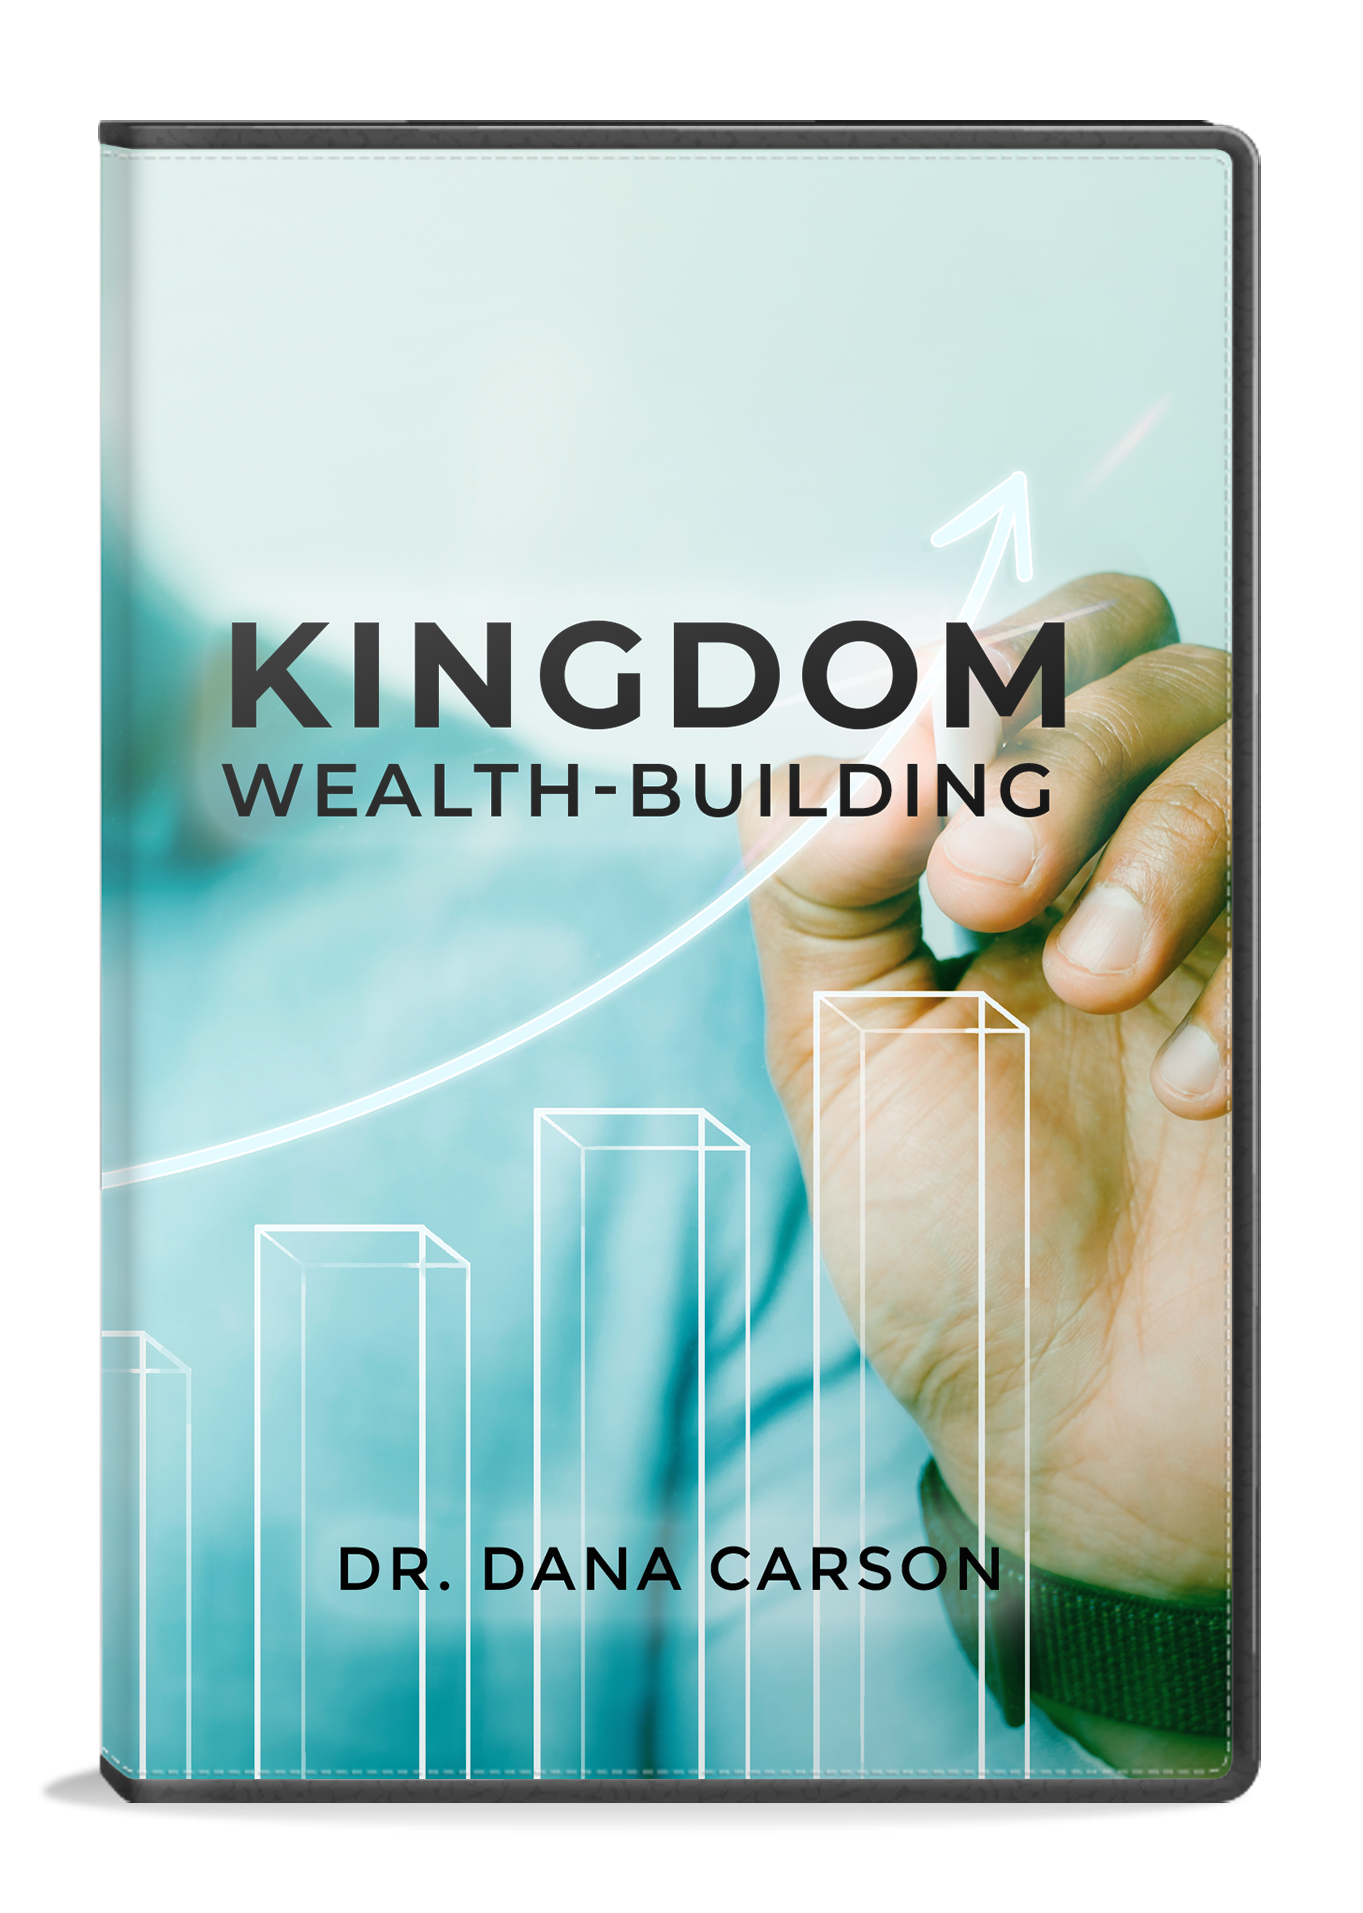 Kingdom Wealth-Building Series